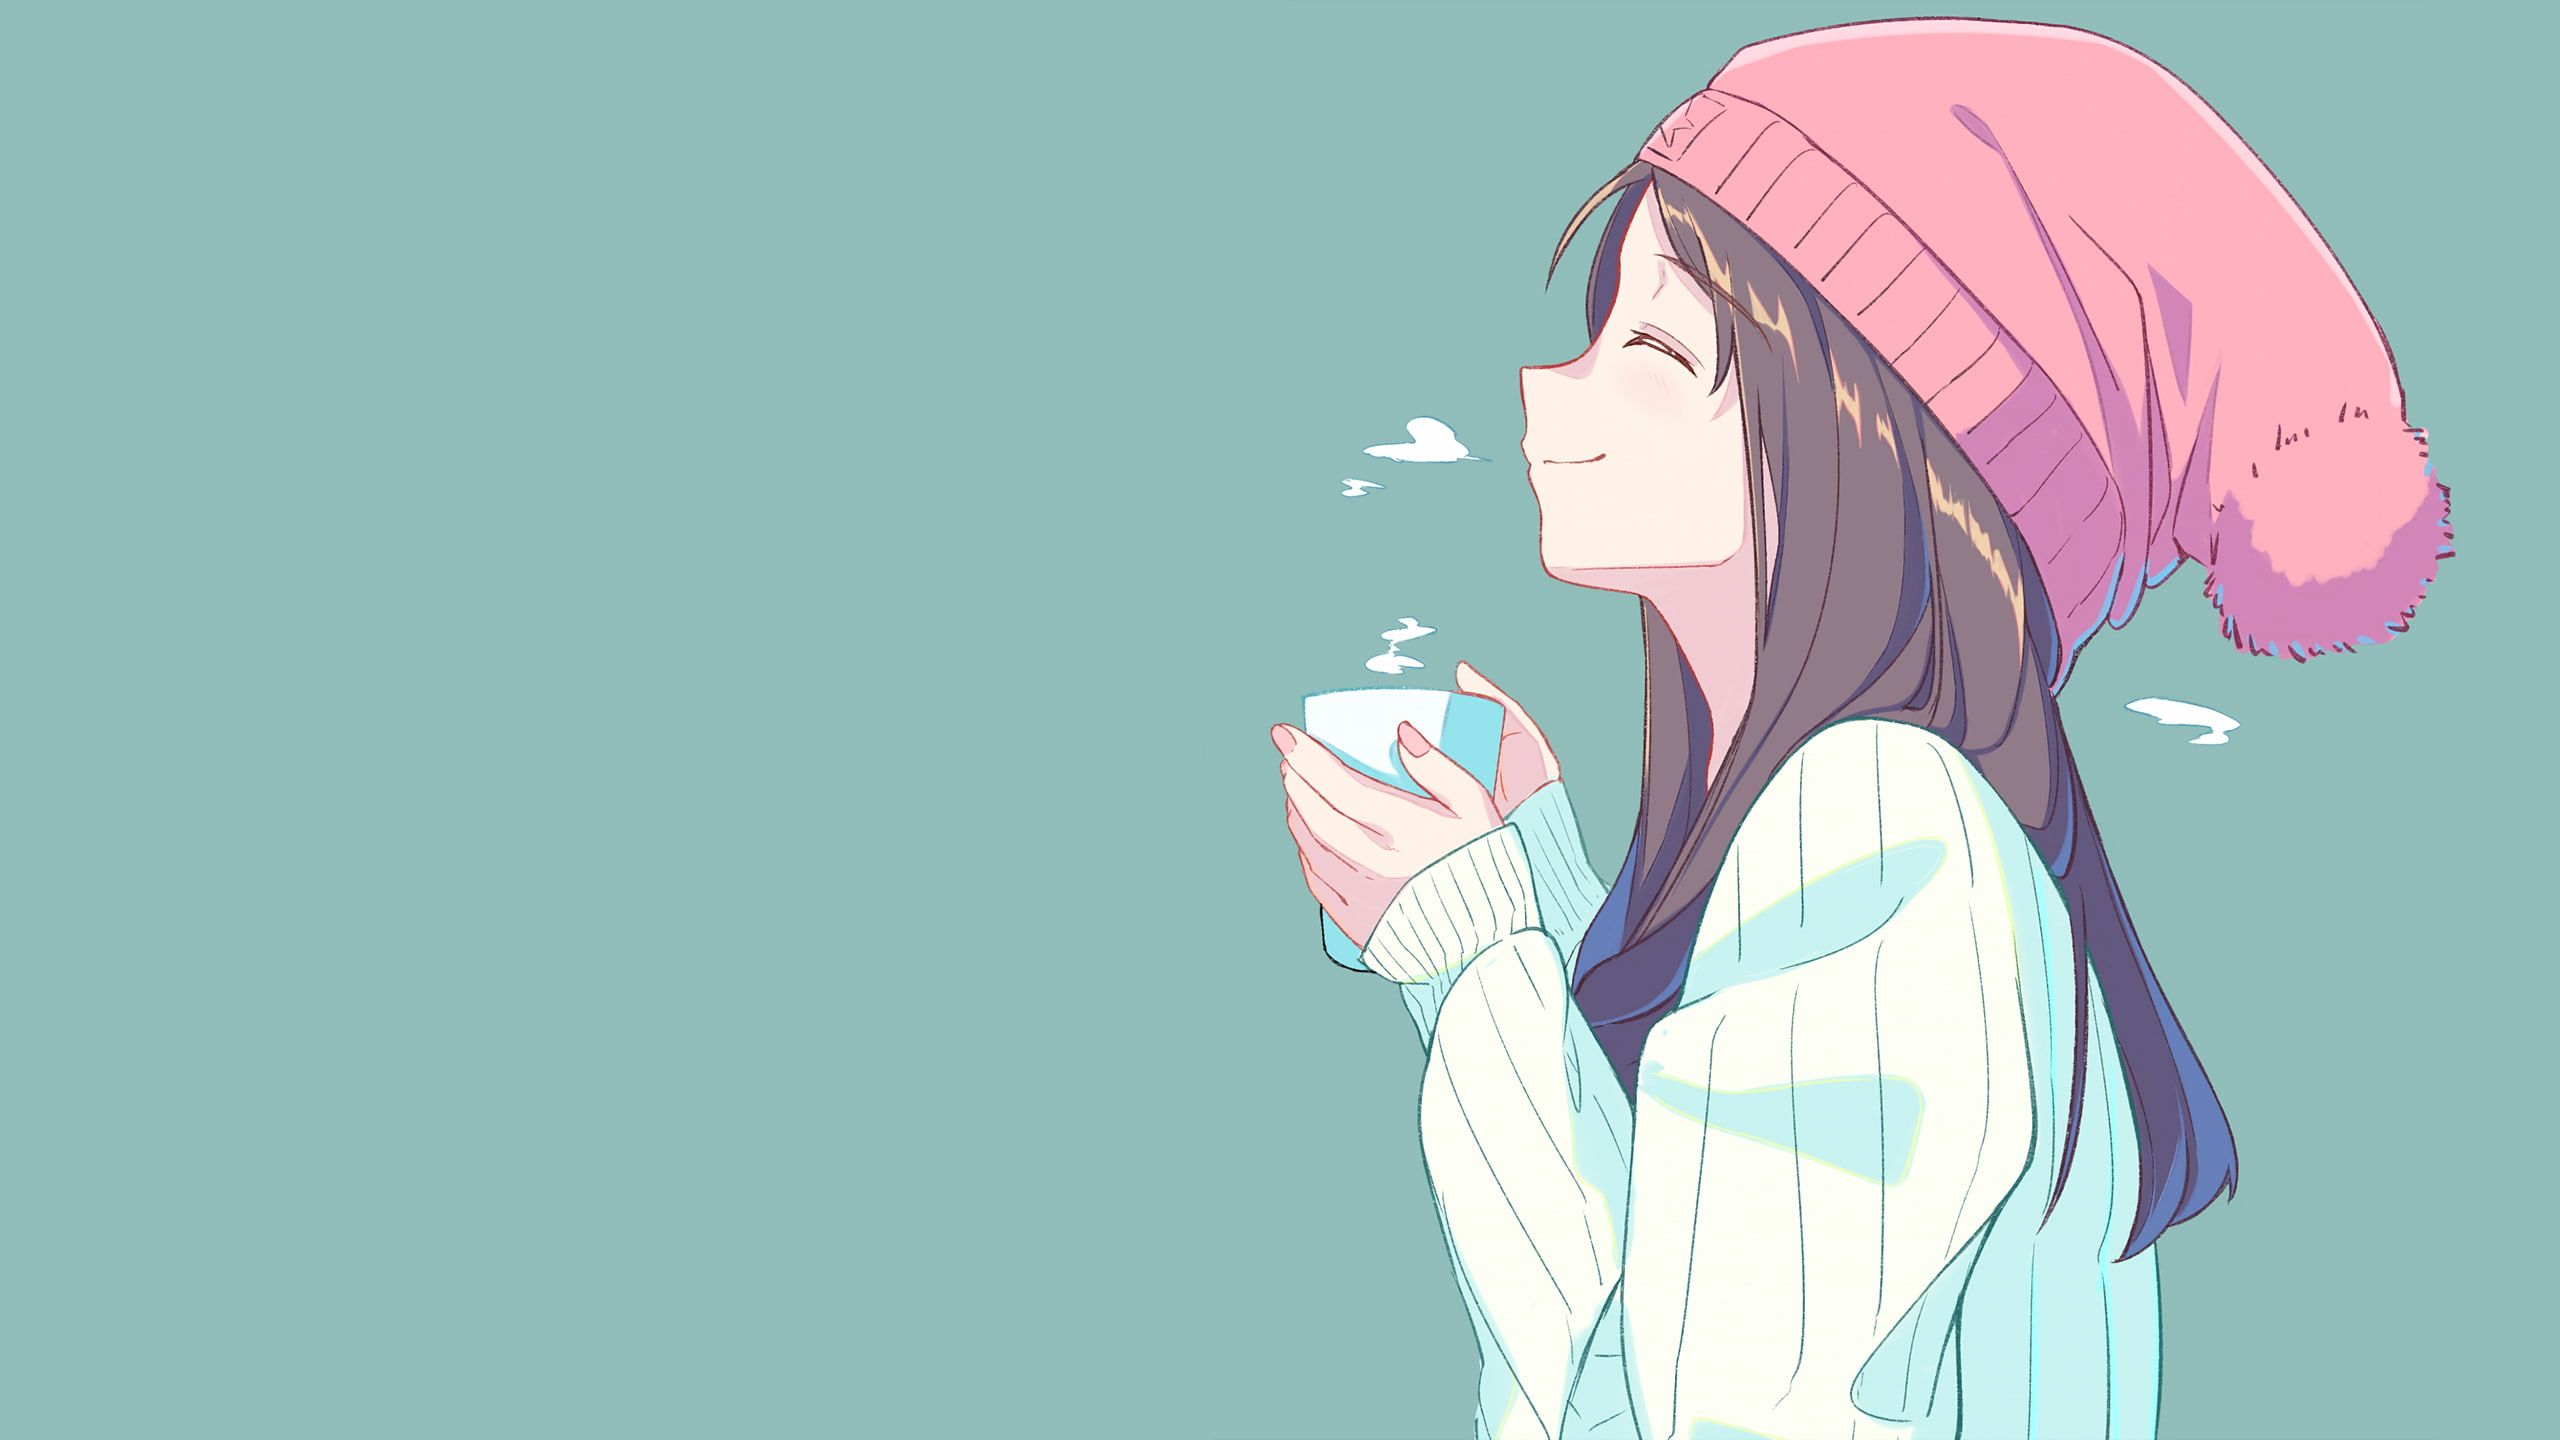 anime #hat anime girls #tea closed eyes simple background #cup #brunette #face #profile K #wallpaper #hdwallpaper #desktop trong 2020. Hình ảnh, Đang yêu, Hình nền